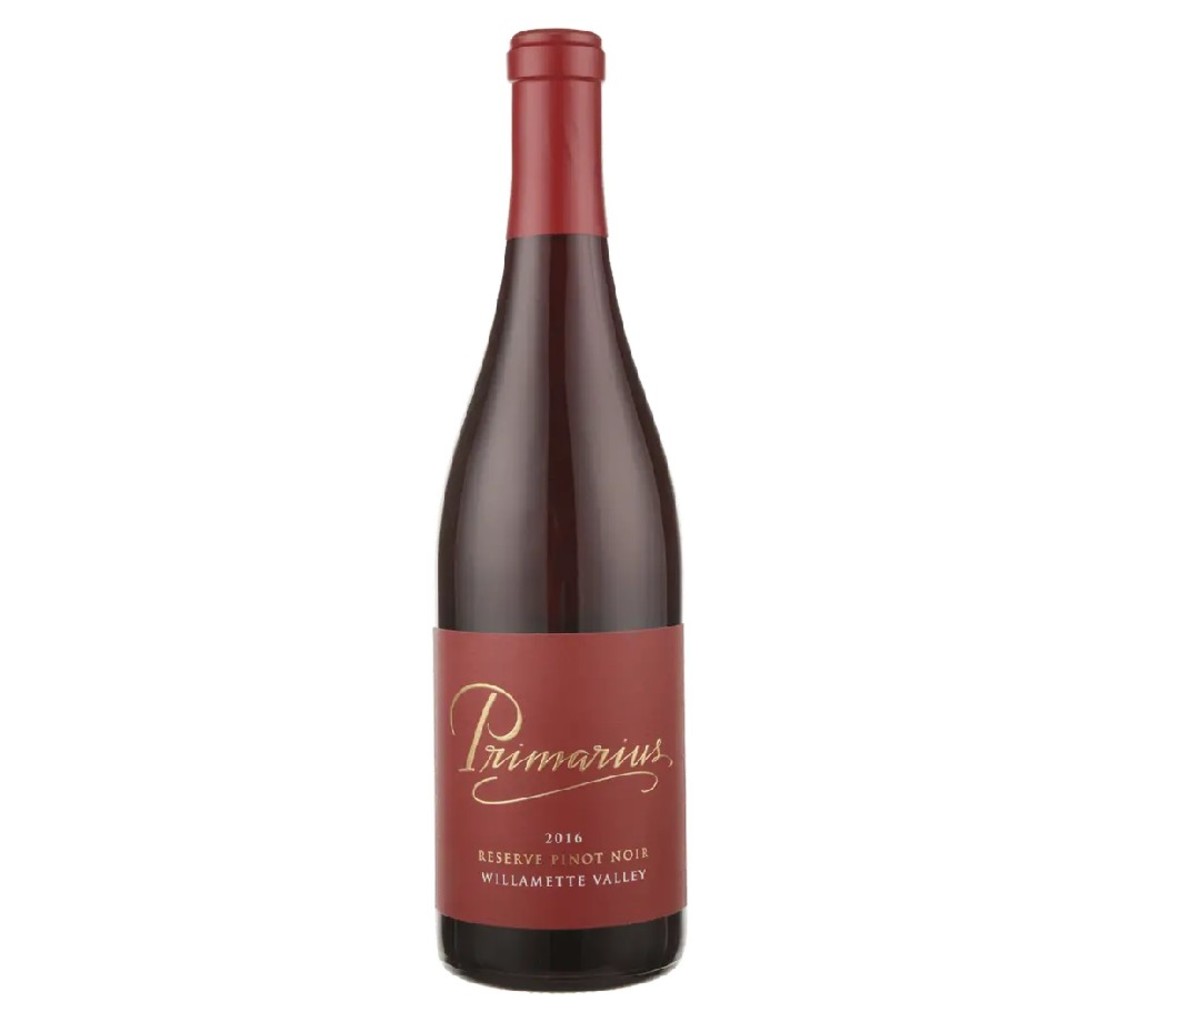 Bottle of Primarius Reserve Pinot Noir